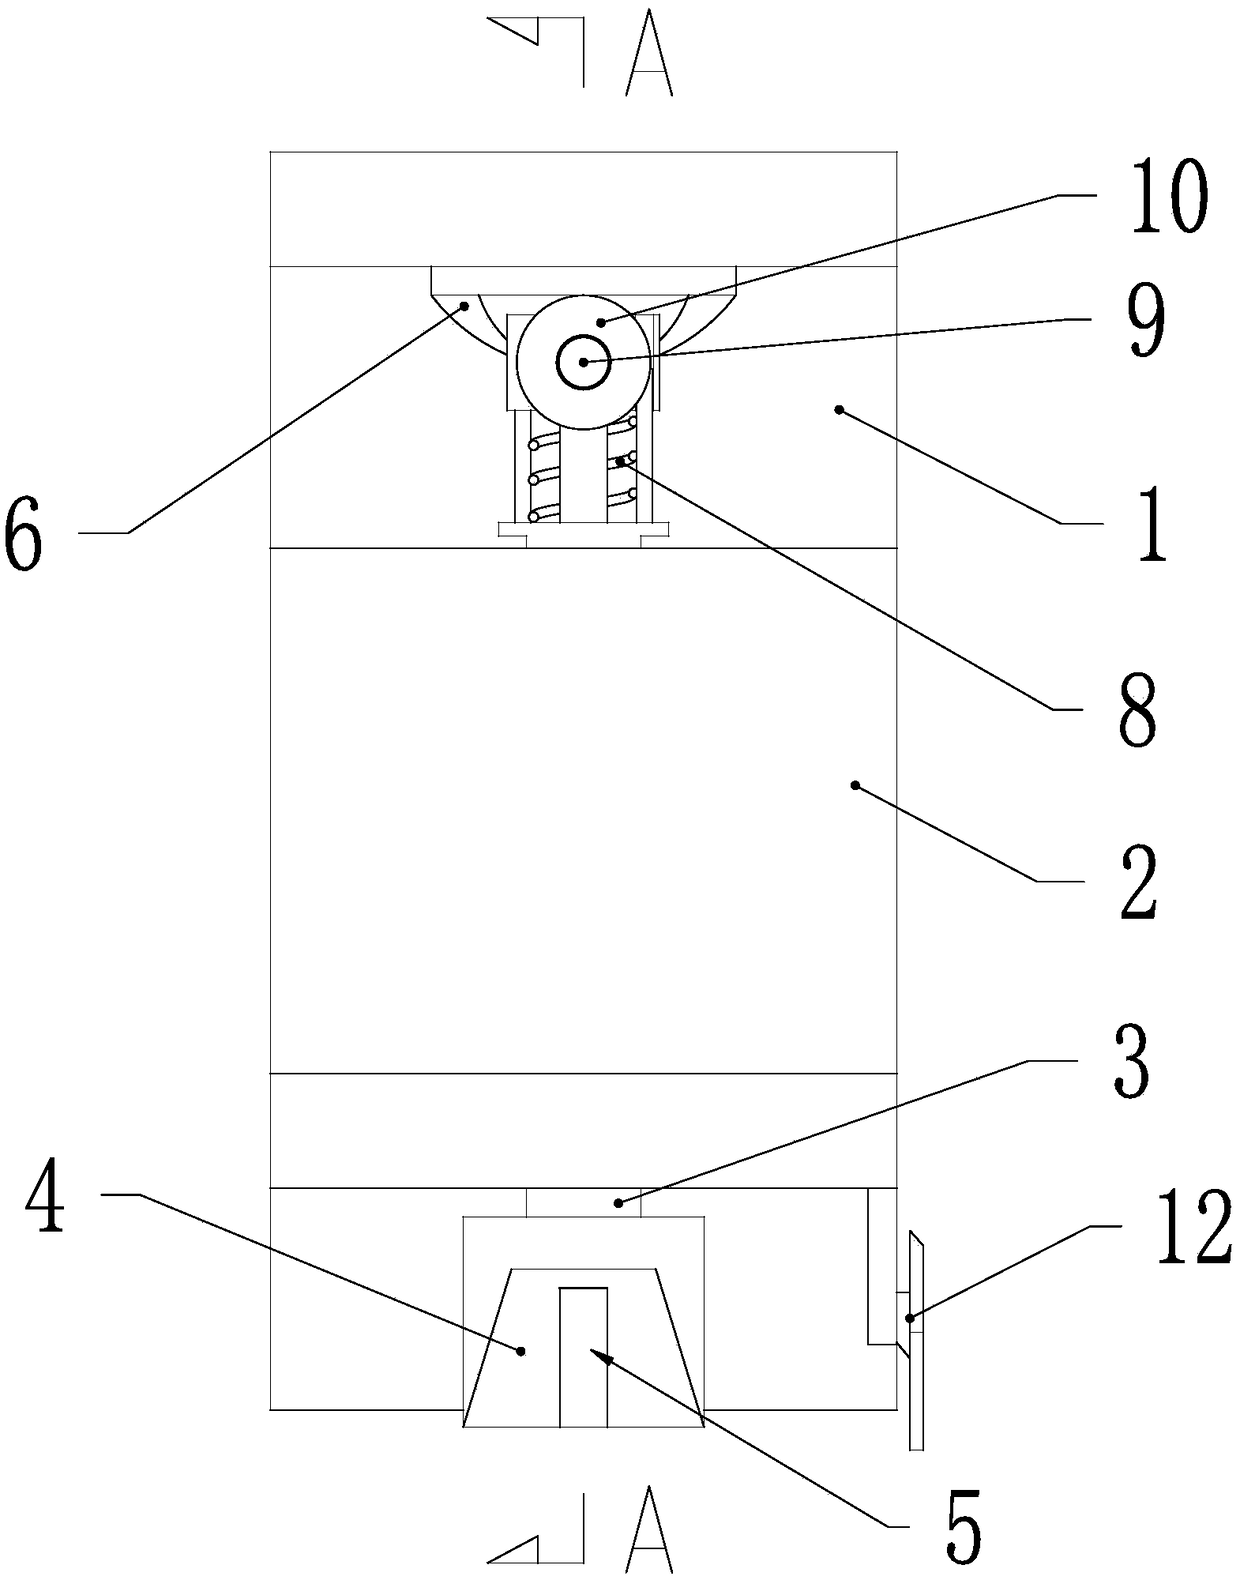 Hank tie knotting device used for hank reeling machine